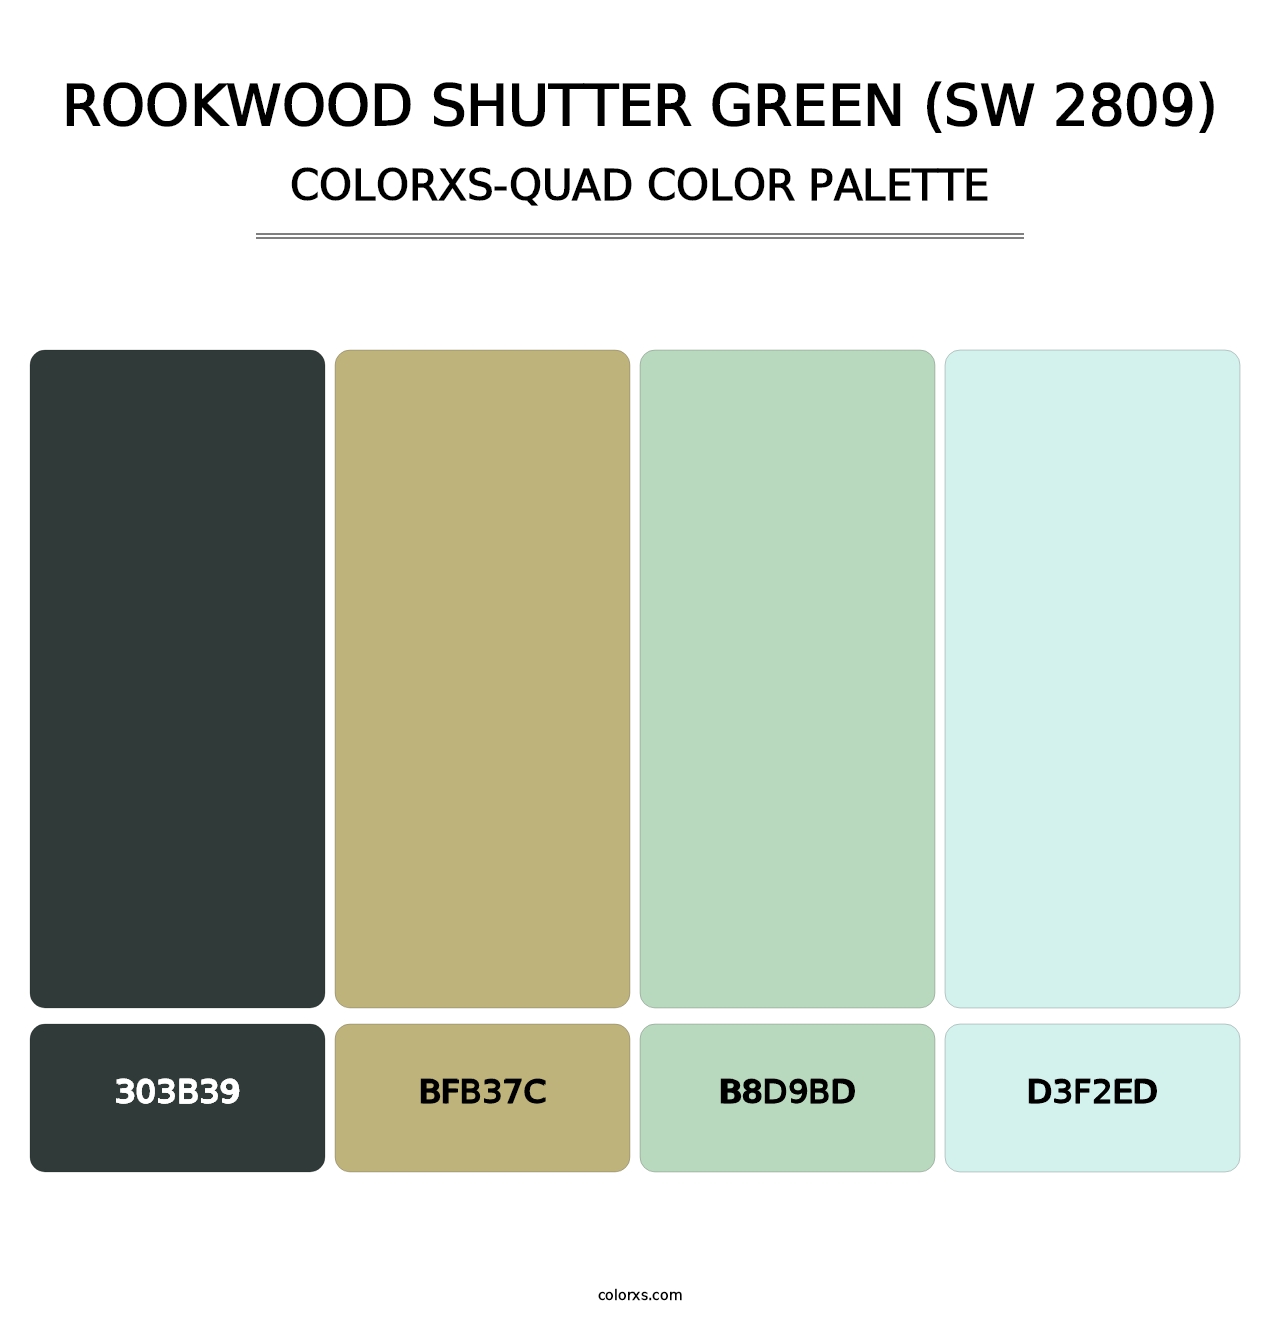 Rookwood Shutter Green (SW 2809) - Colorxs Quad Palette